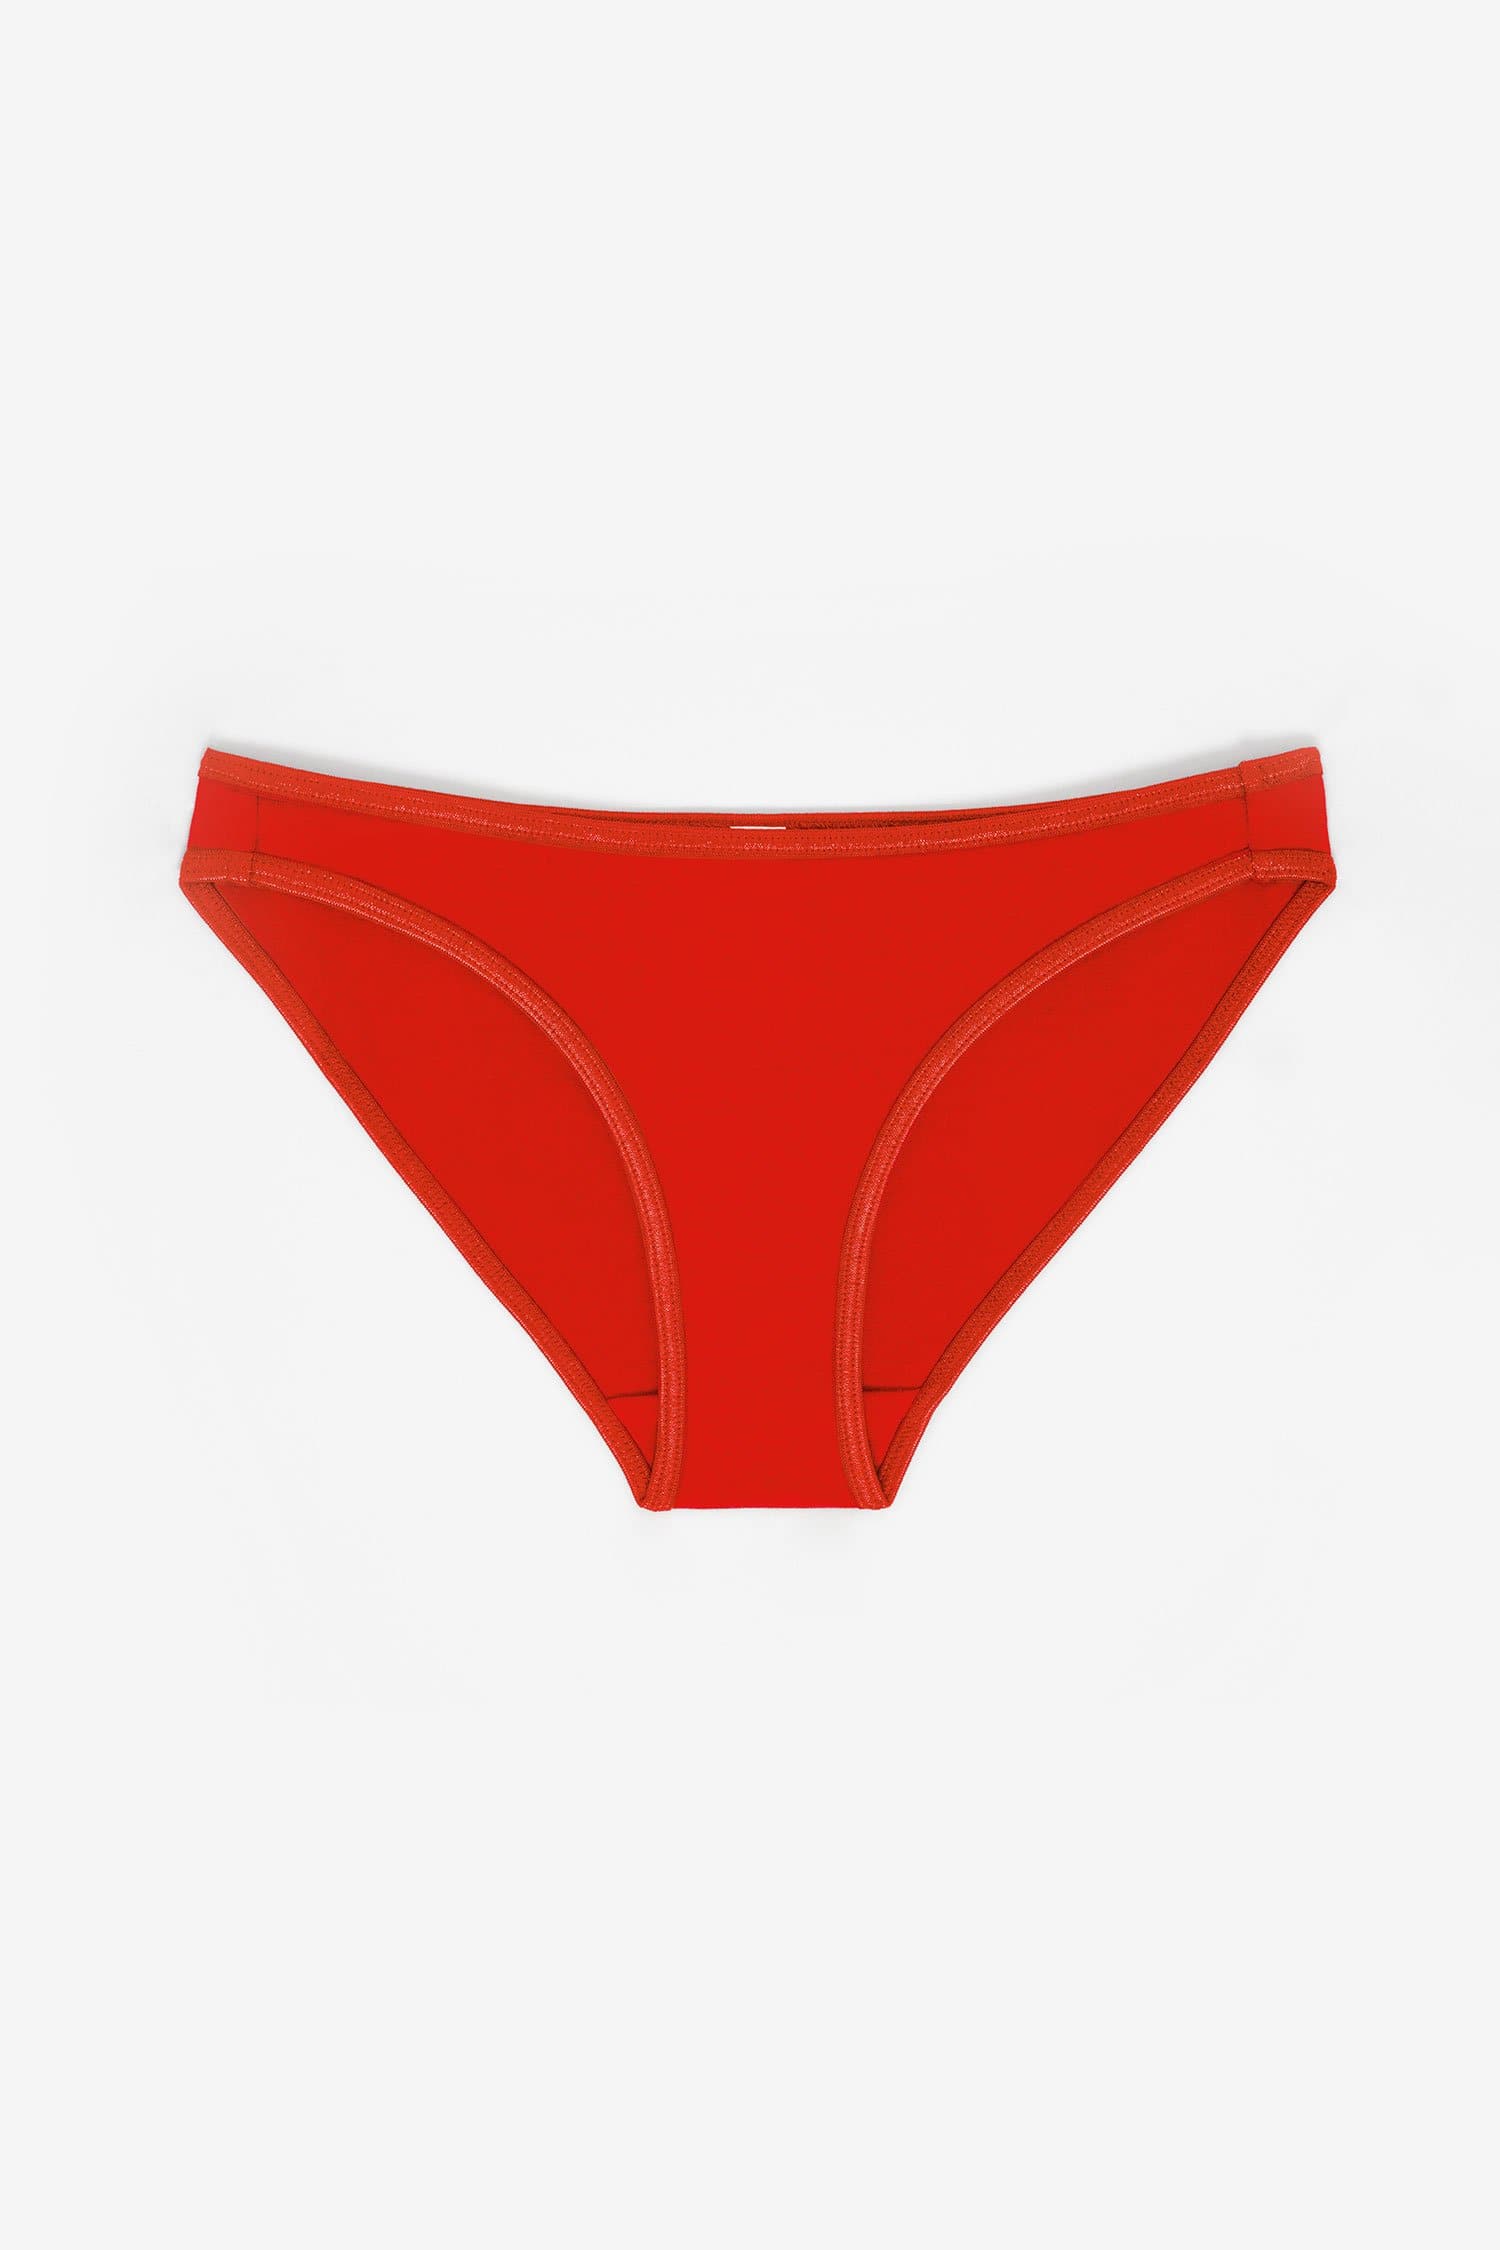 ANLIQI Bikini Underwear Women Low Rise Panties Briefs Breathable